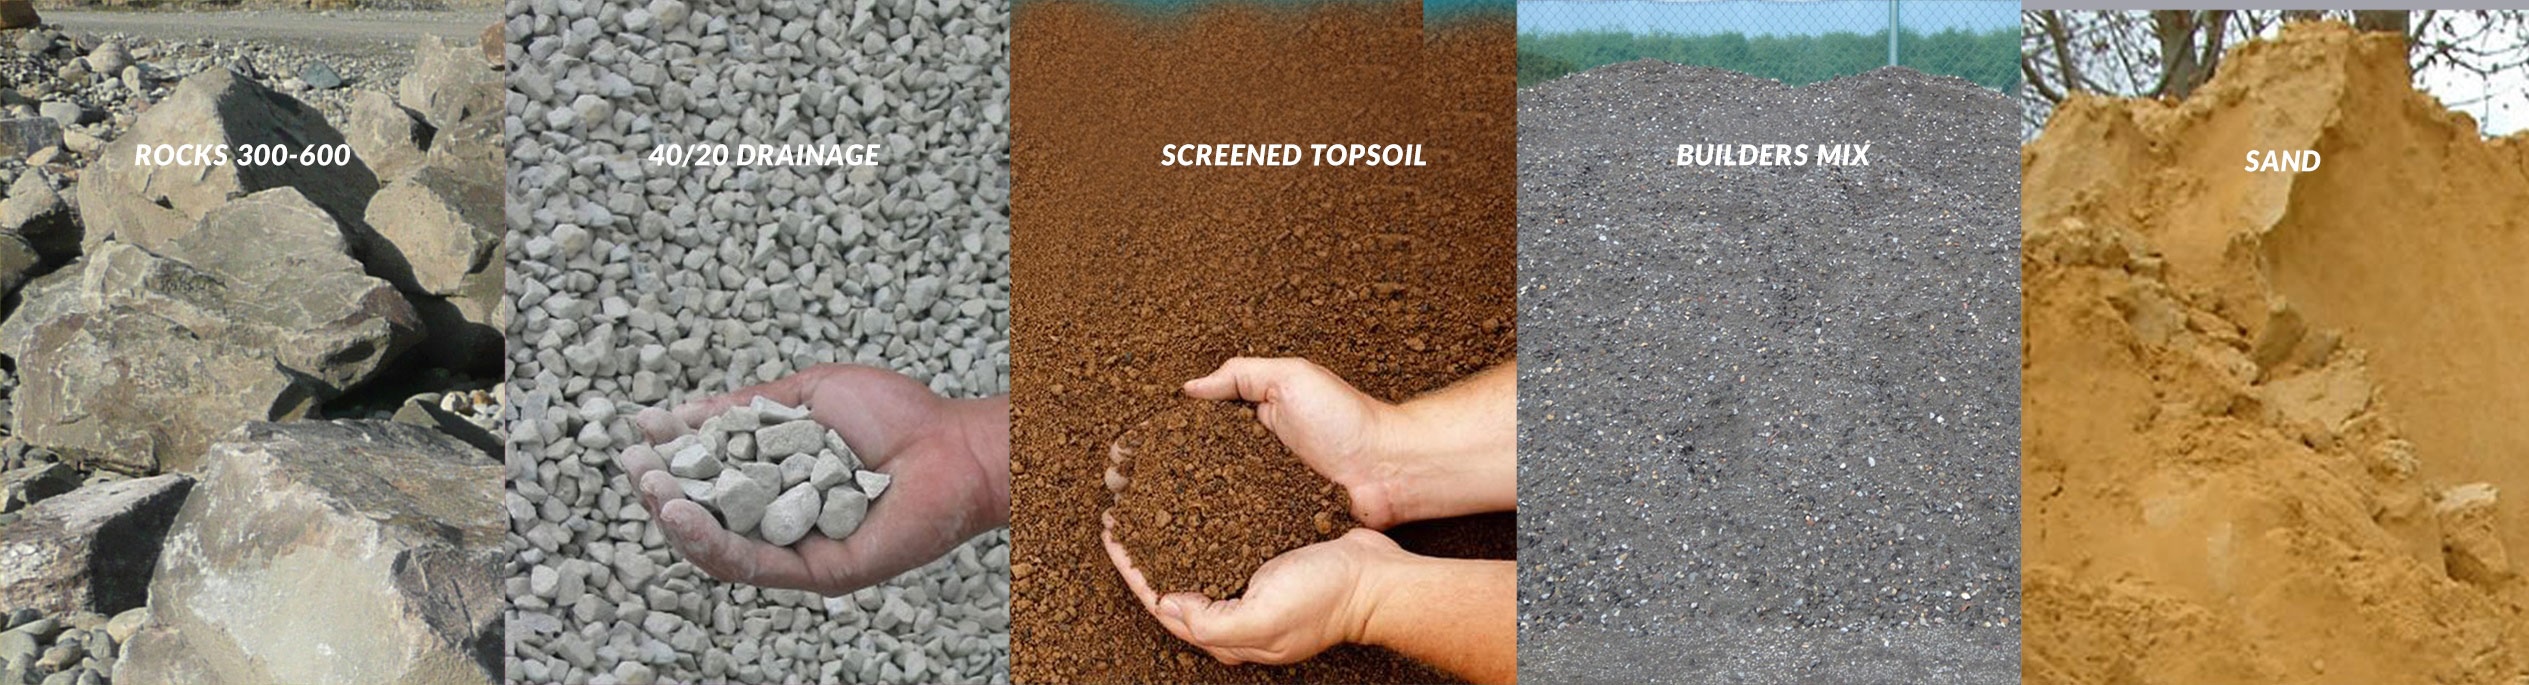 Graded metal aggregates soils for your next job